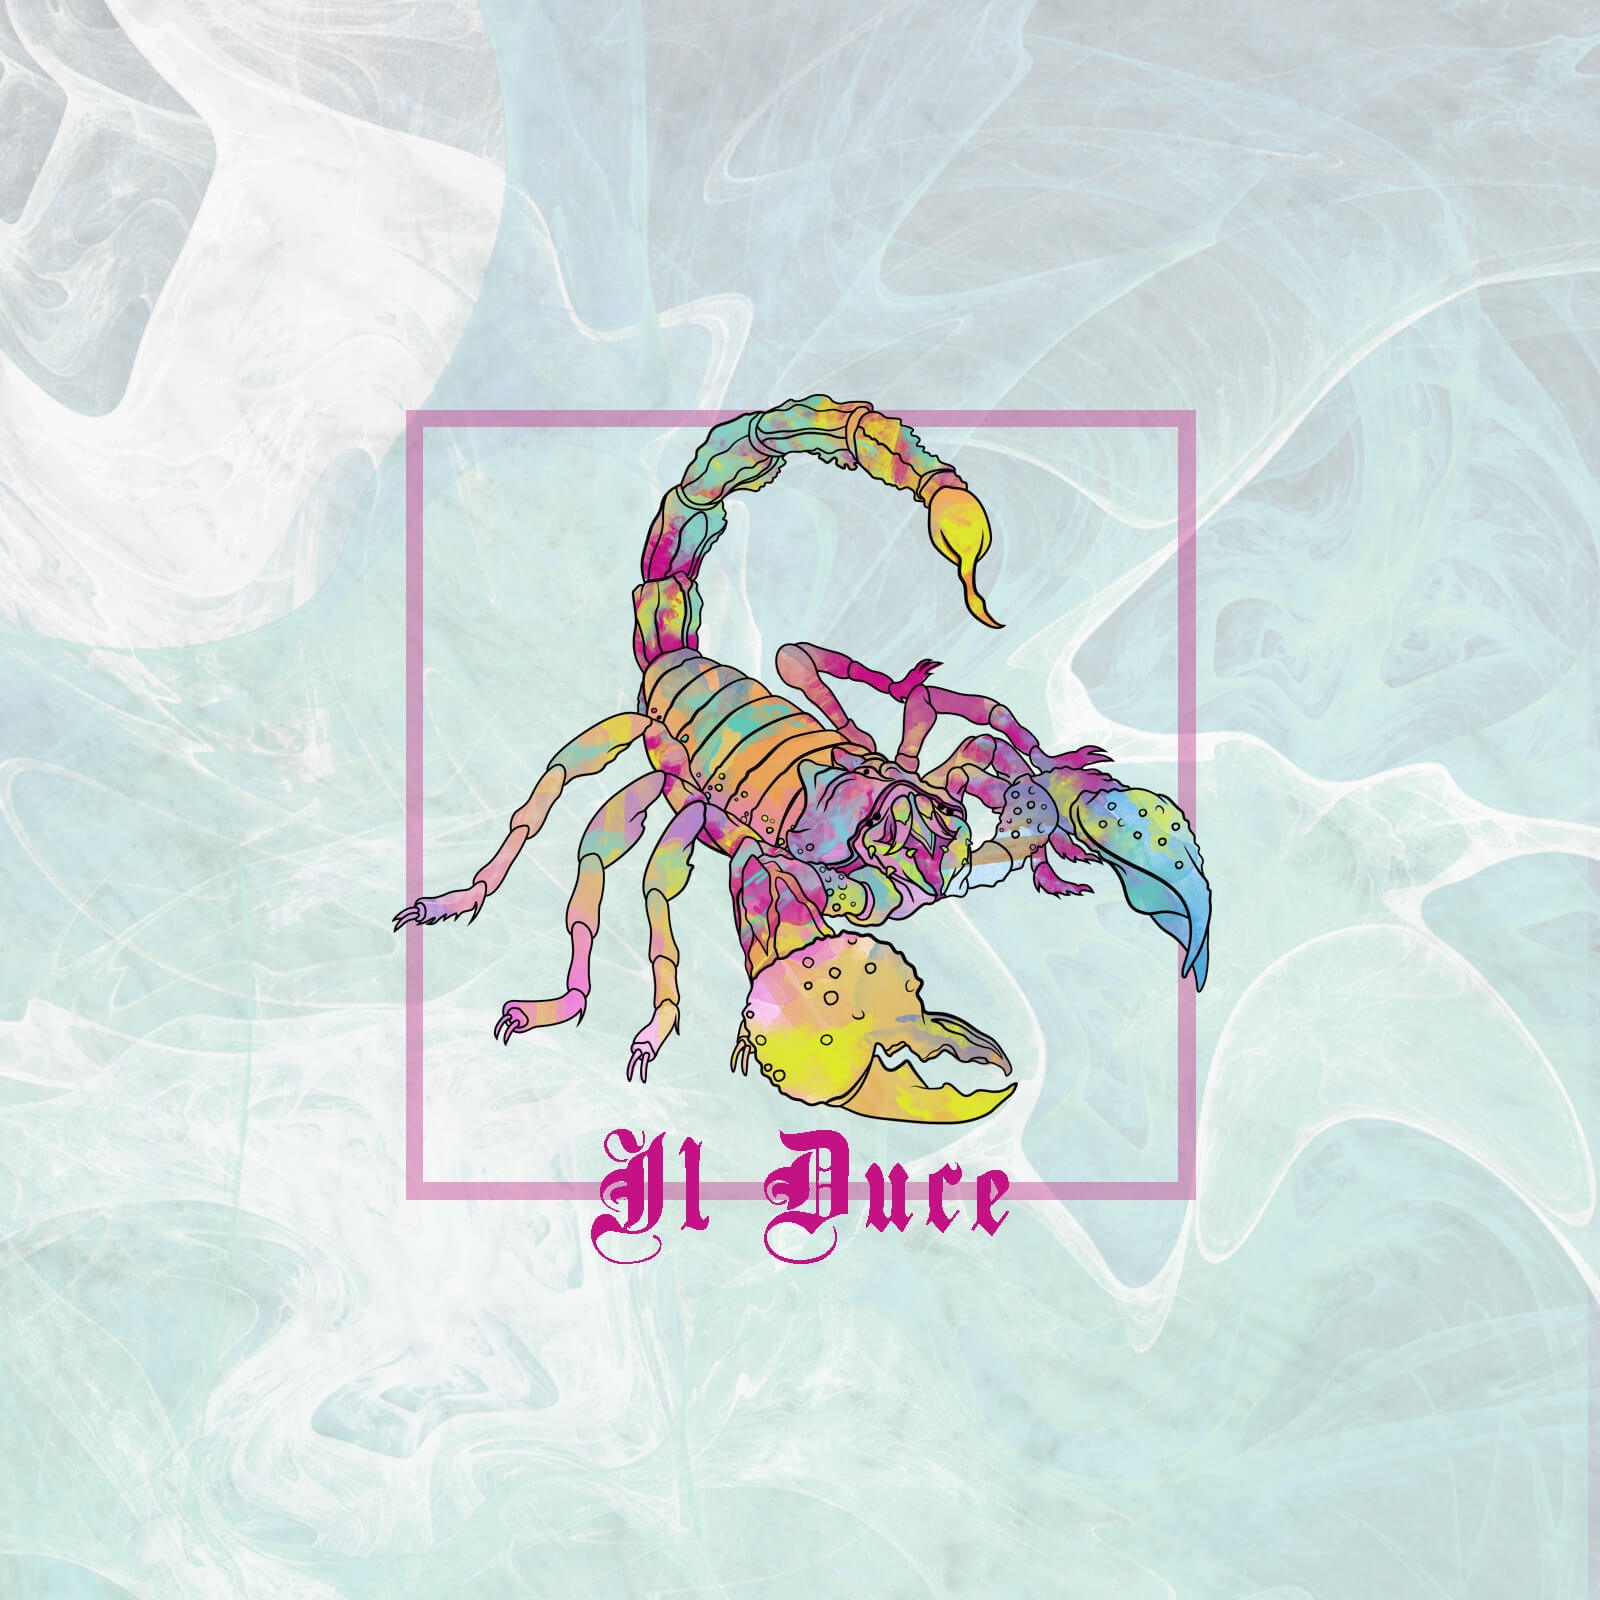 multicolored scorpion with 'Il Duce' written below